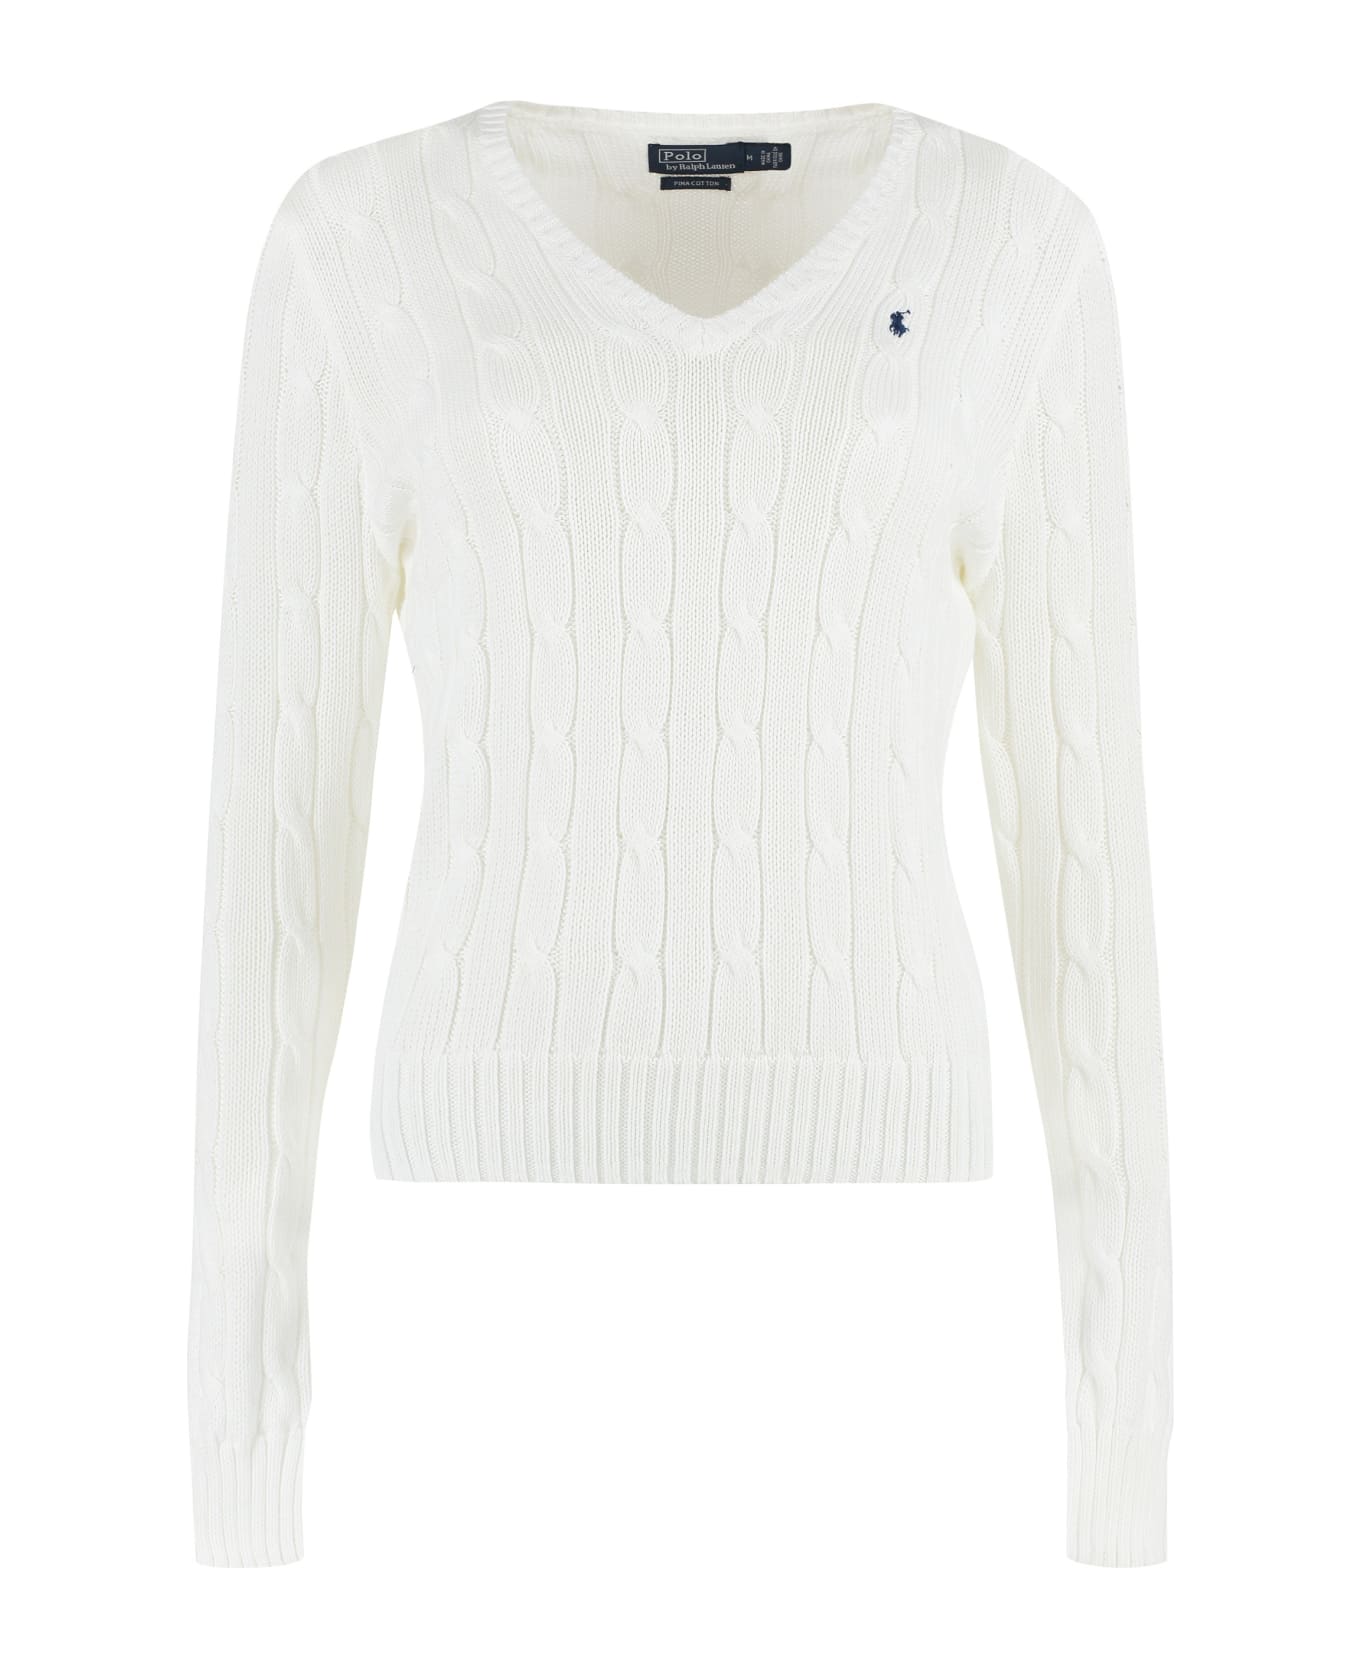 Polo Ralph Lauren Cable Knit Sweater - White ニットウェア